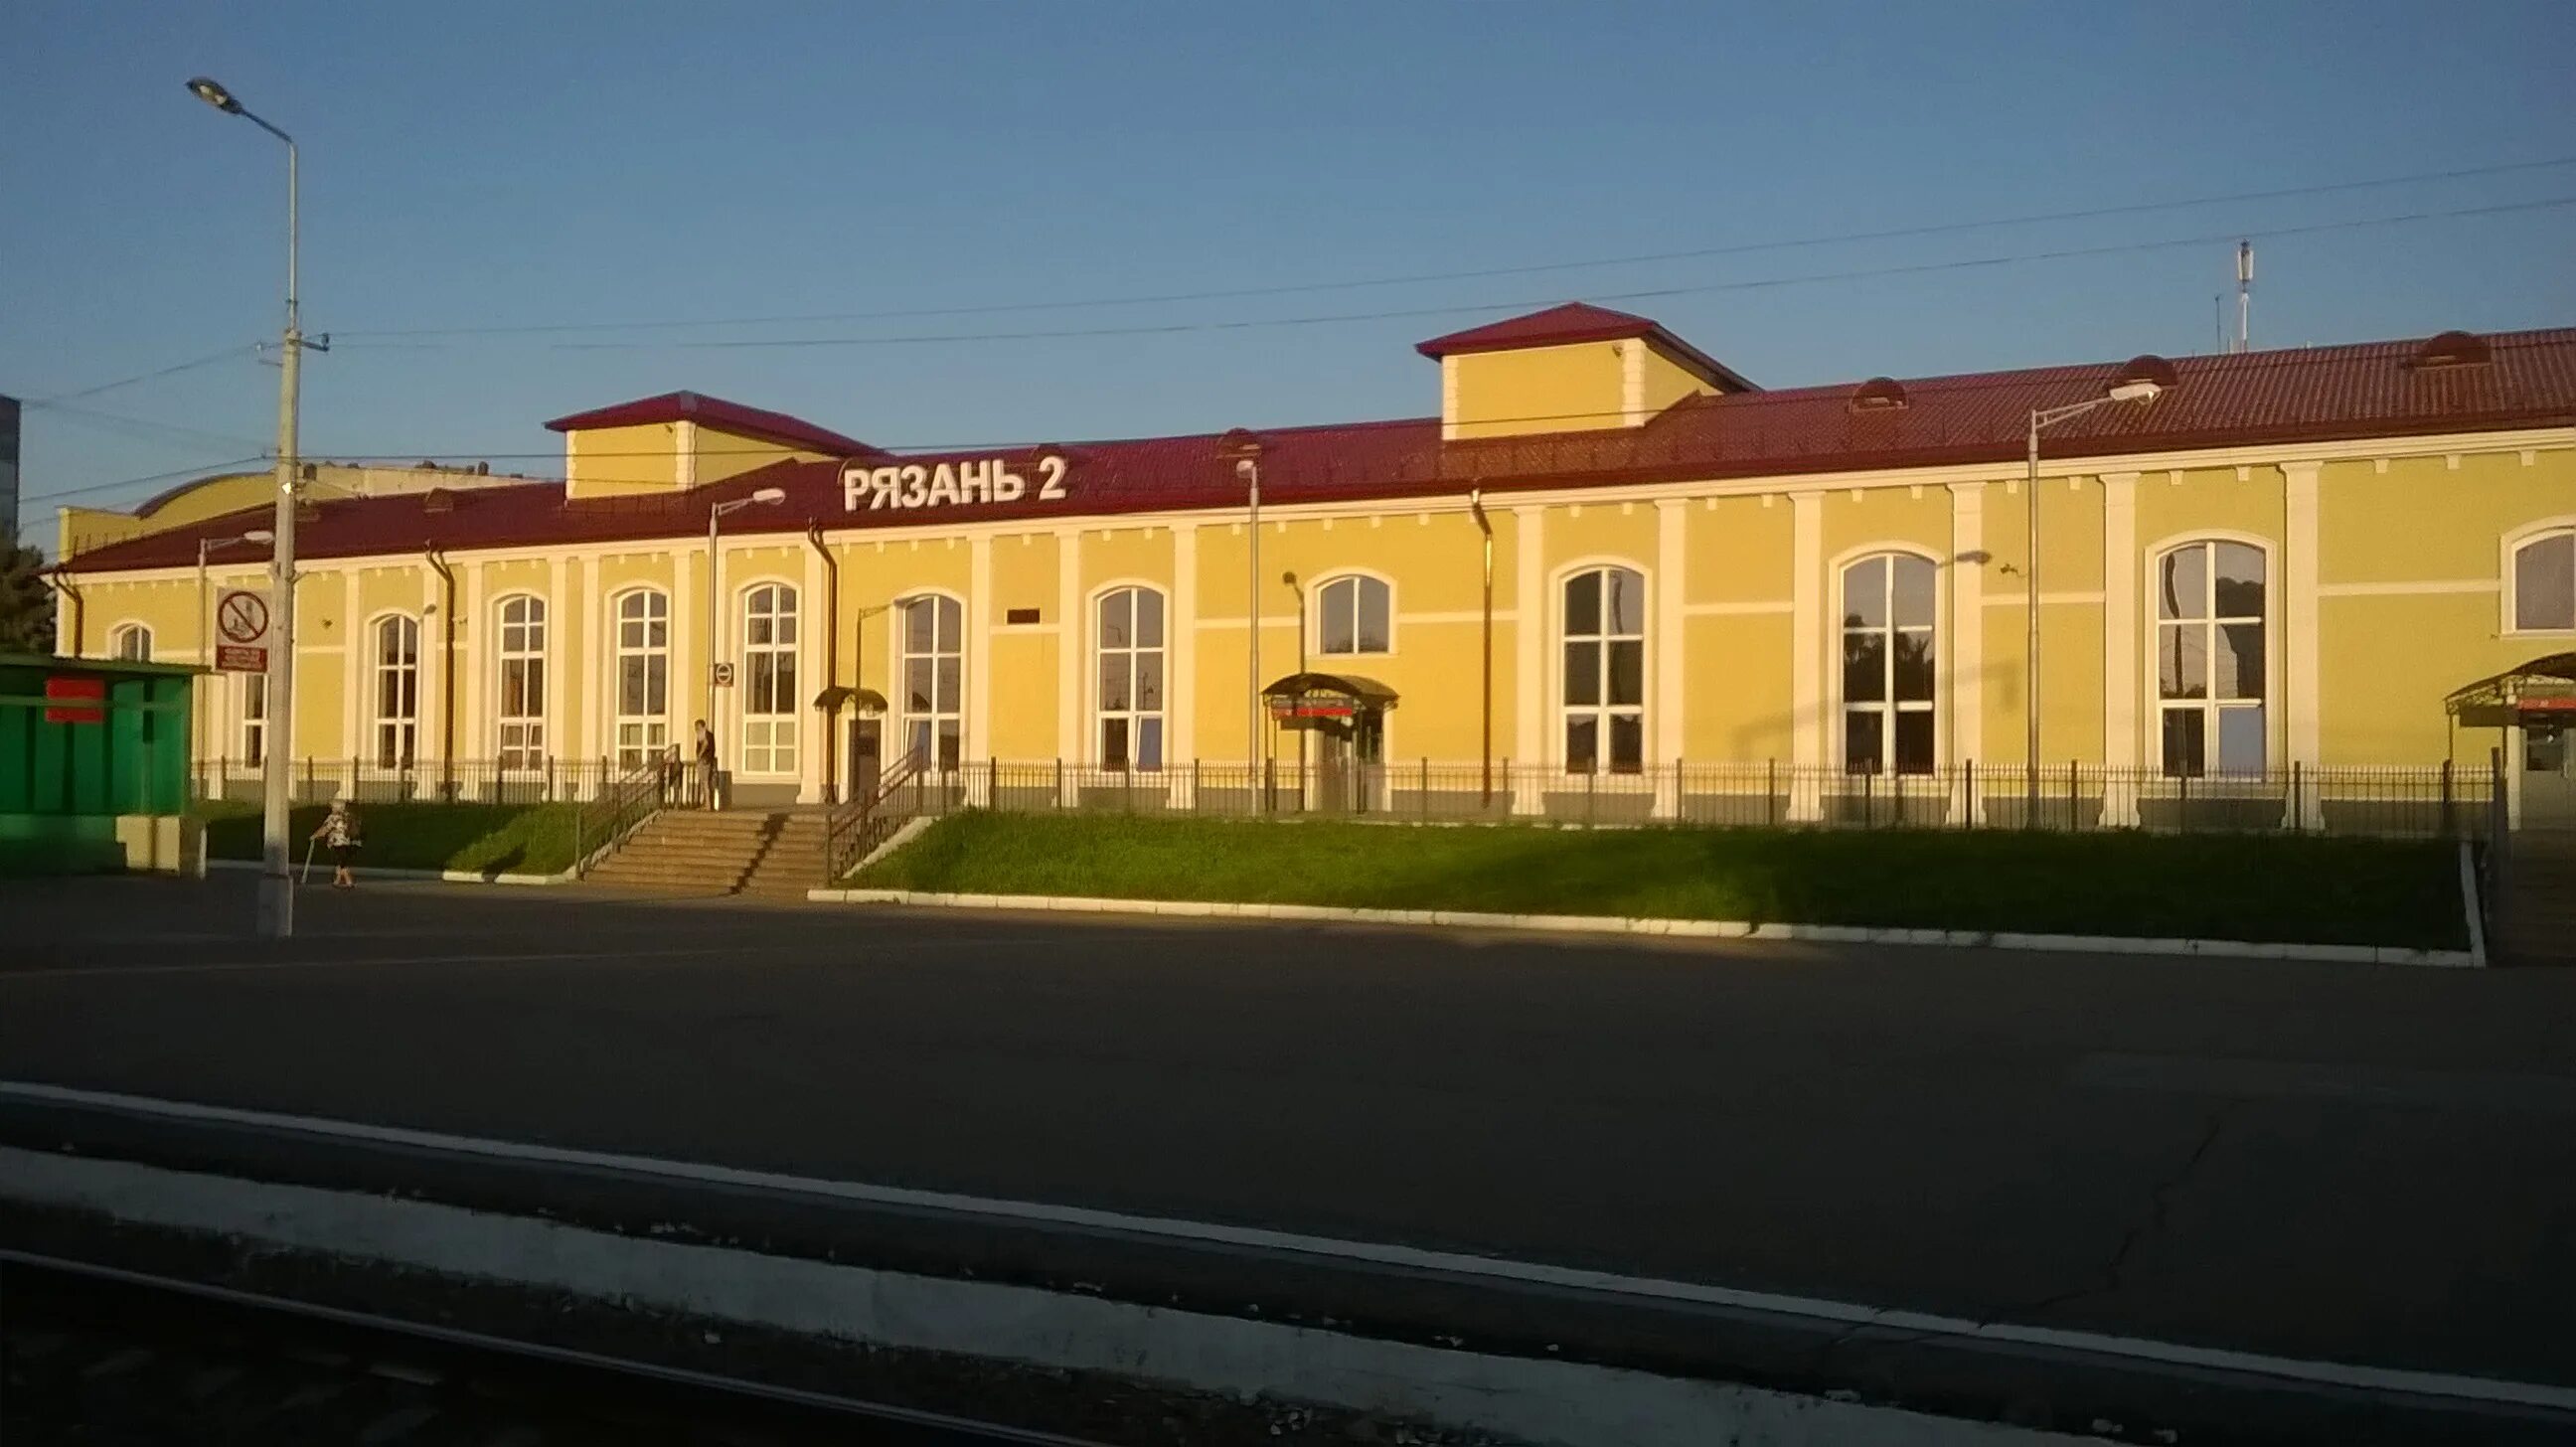 Станция Рязань 2. Ж/Д вокзал Рязань 2. ЖД станция Рязань 2. ЖД Рязань 2 вокзал вокзал.